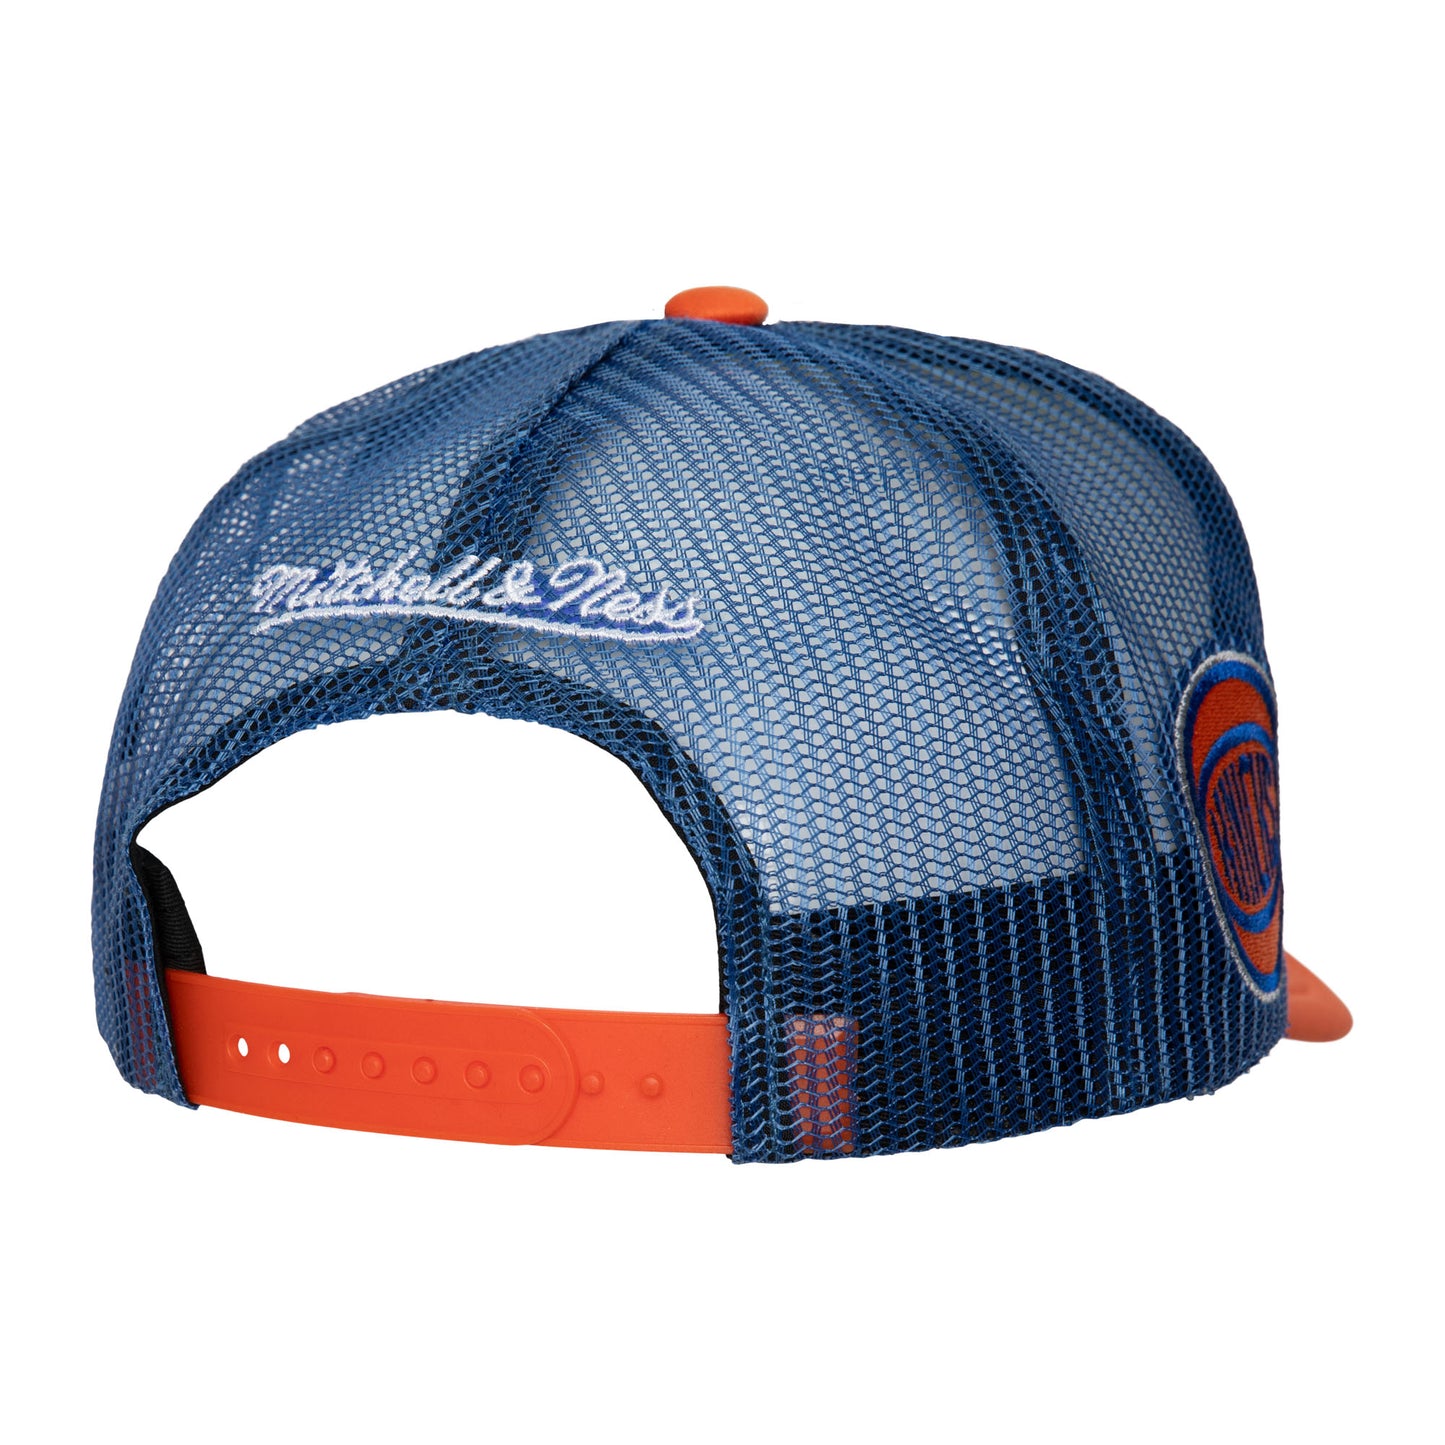 New York Knicks Mitchell & Ness Blocker Foam Trucker Snap Back Hat